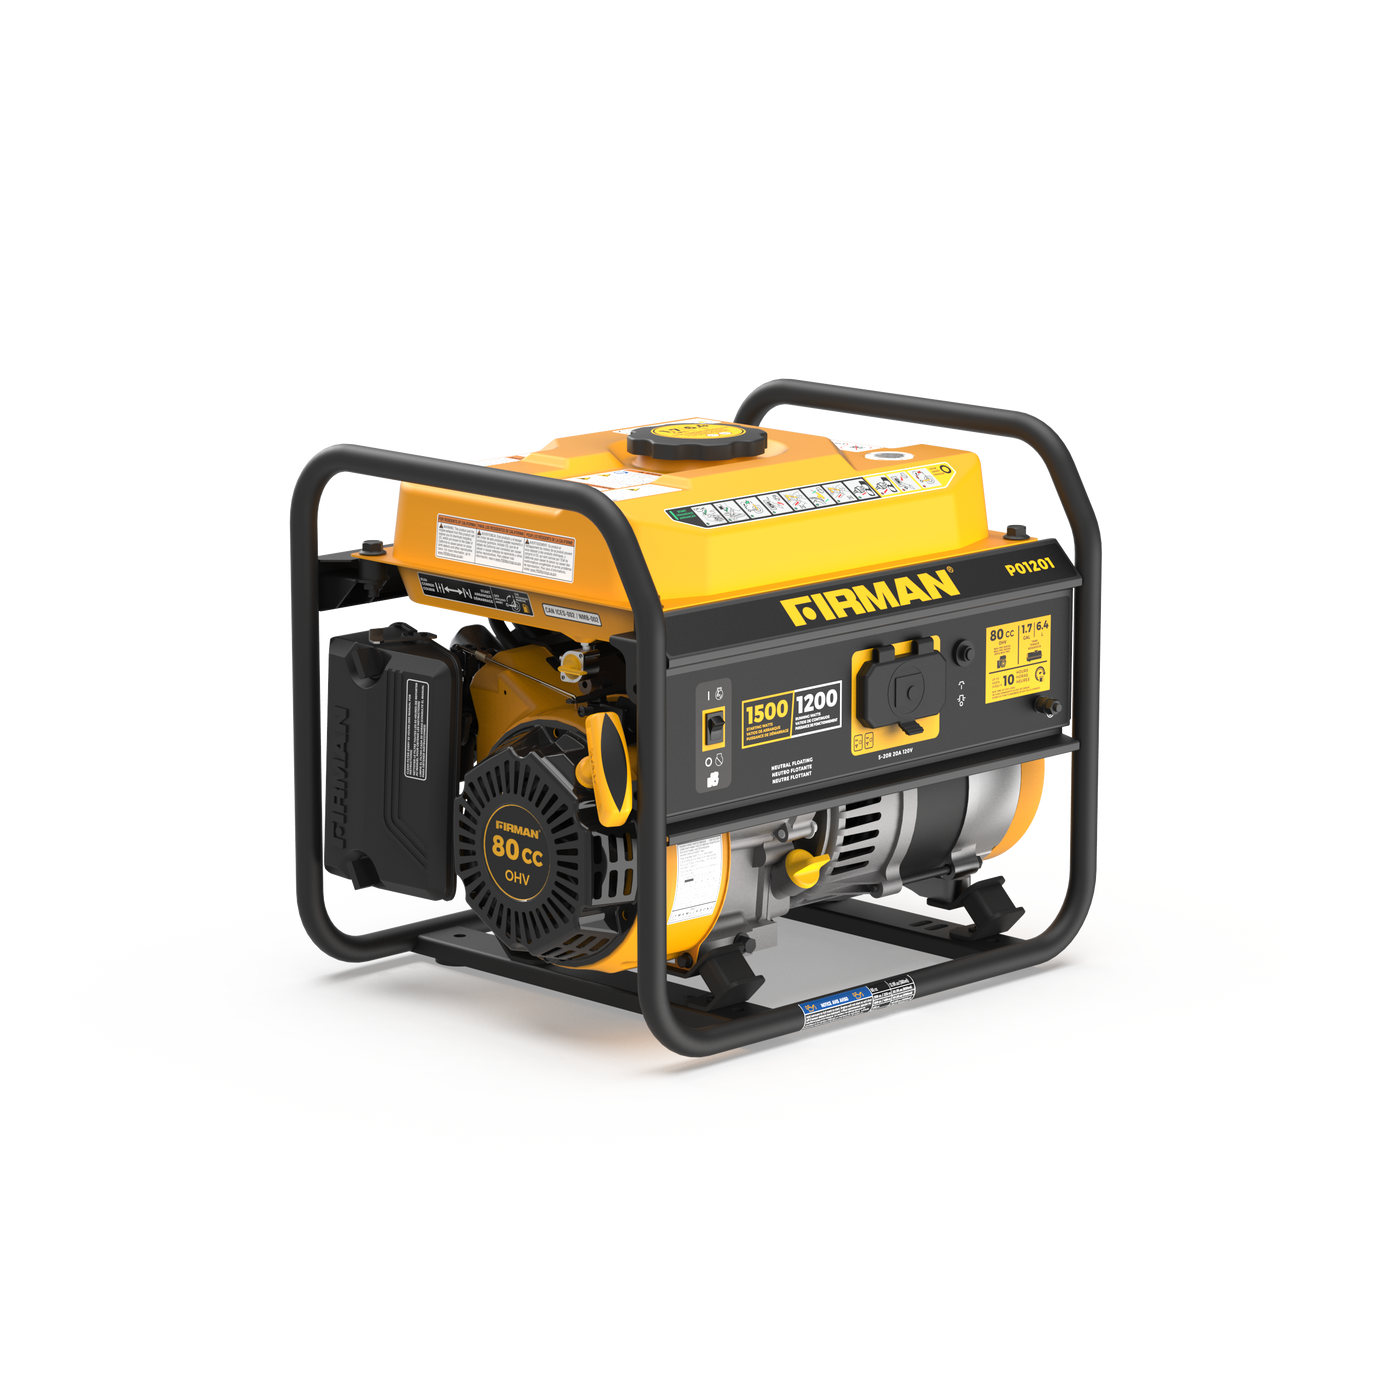 Firman Gas Portable Generator 1300W Recoil Start - P01001